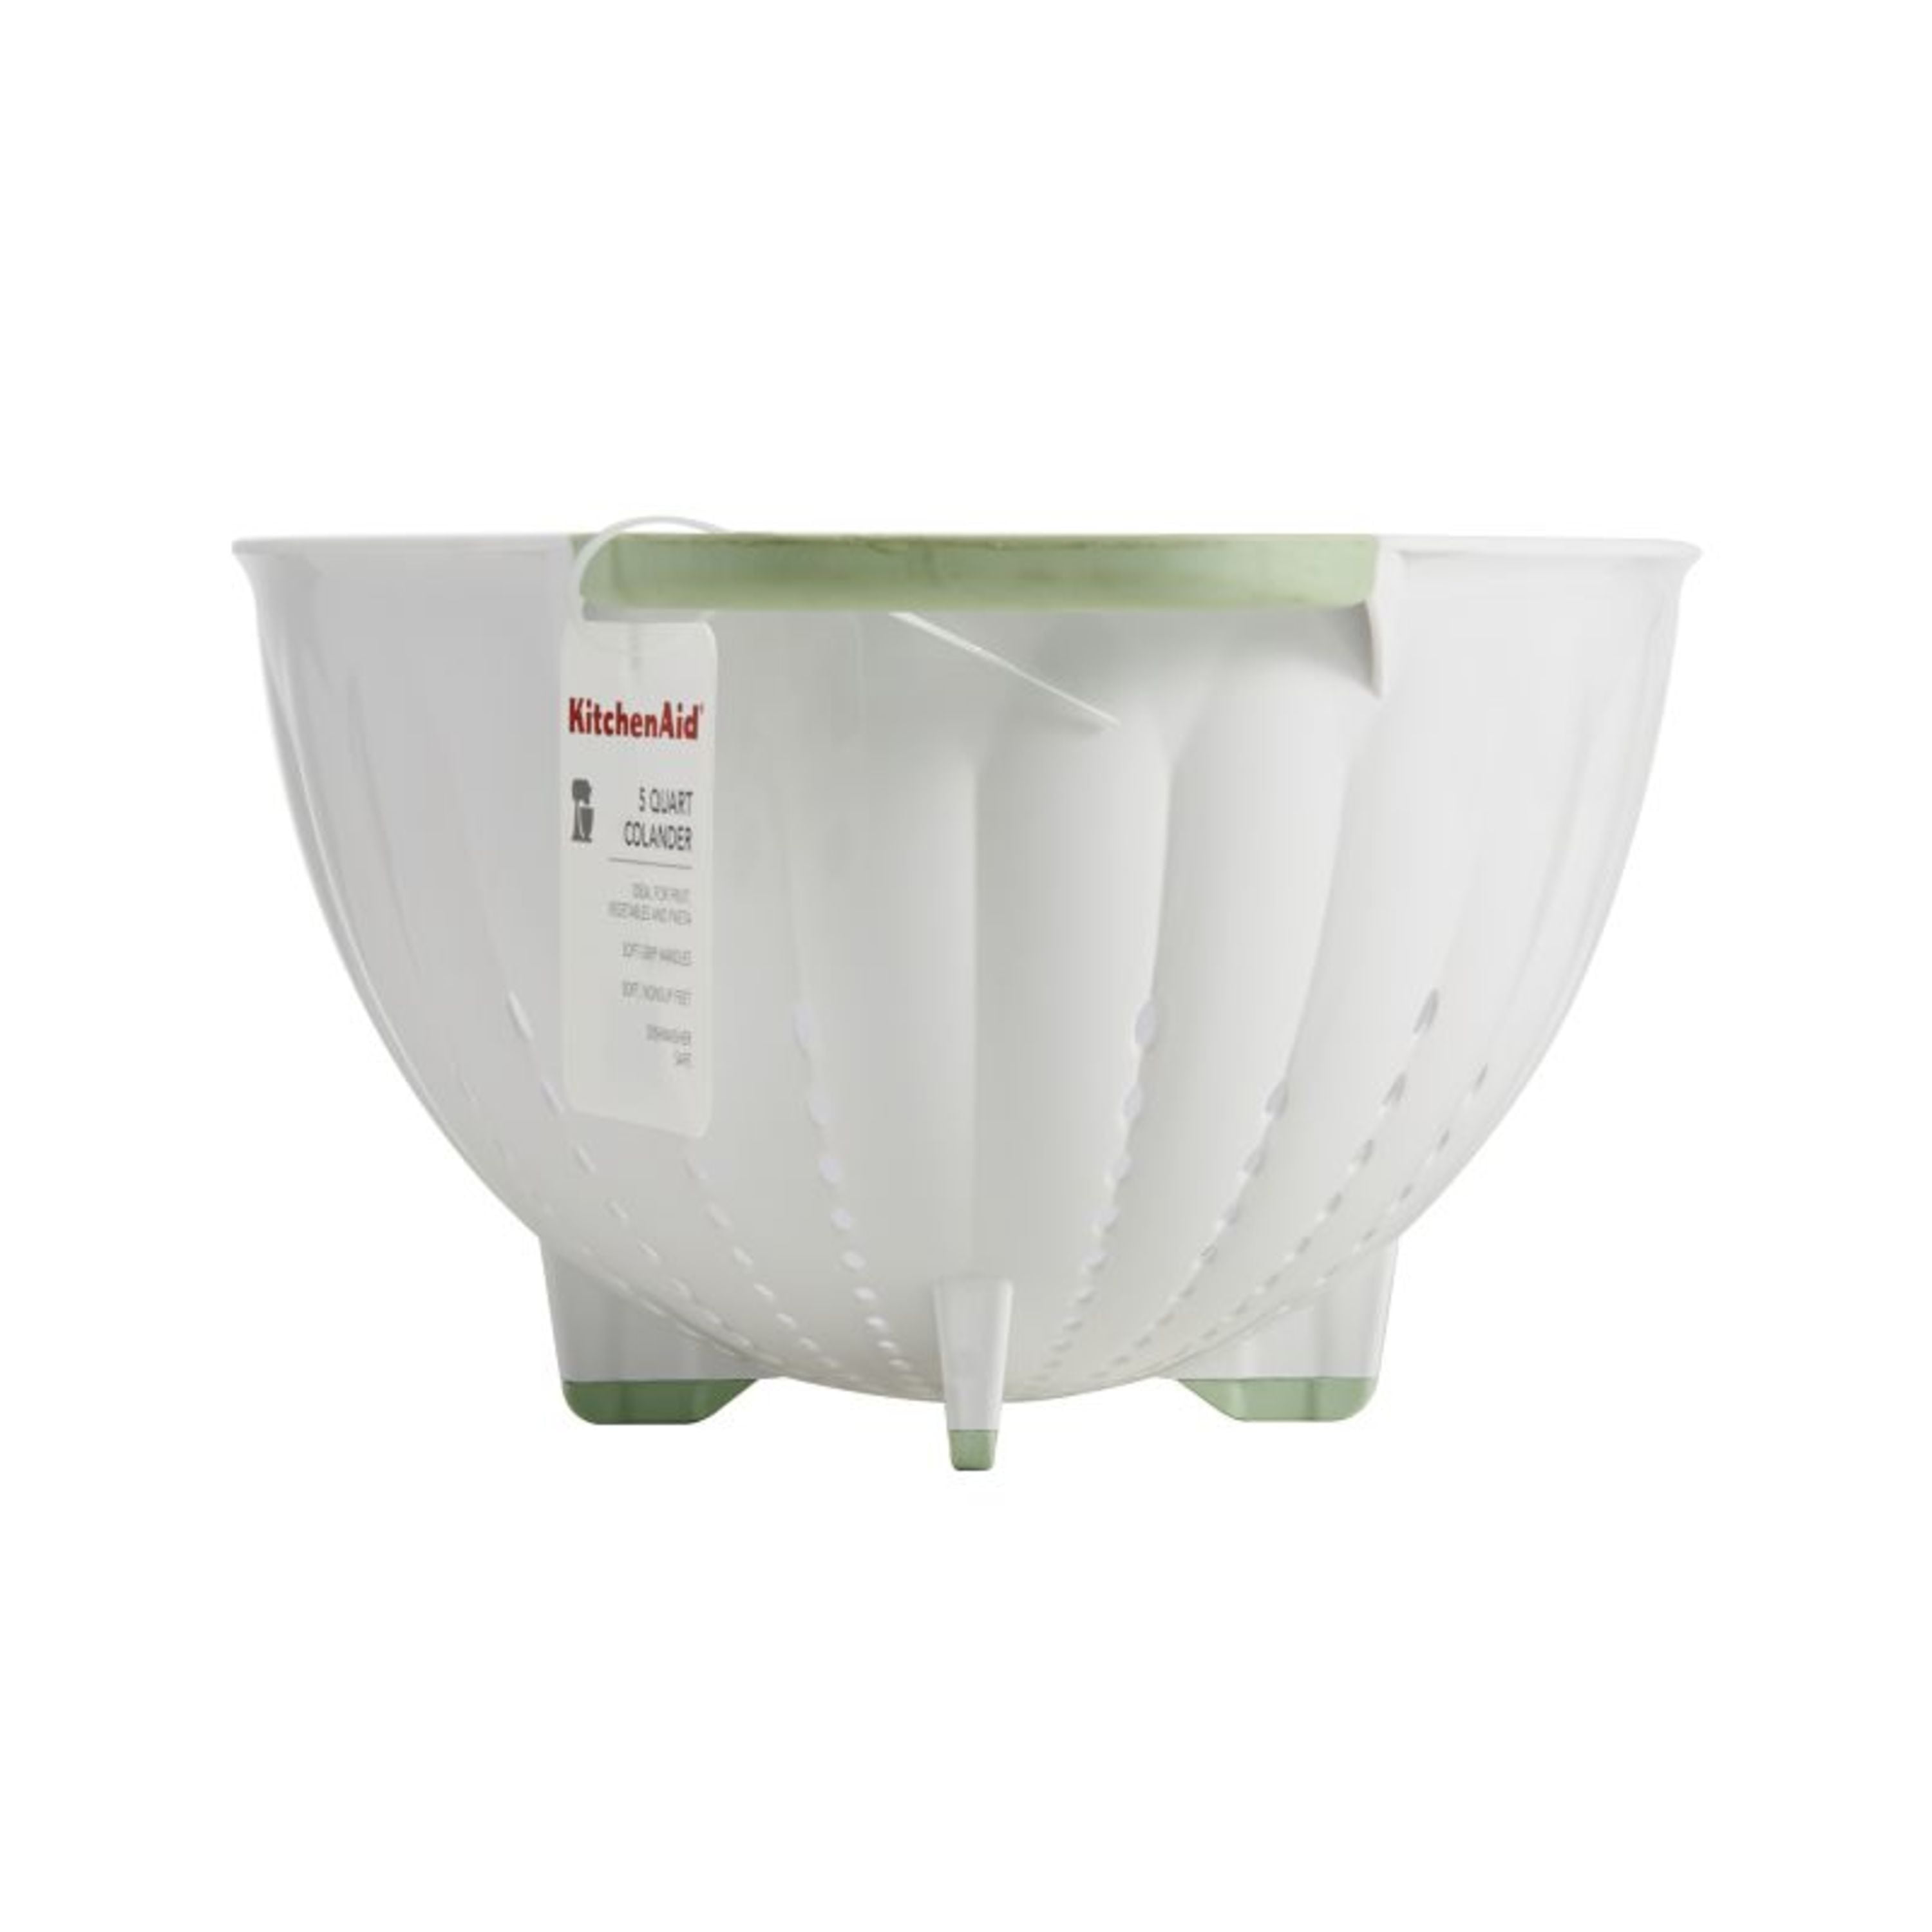 Kitchenaid 5-quart BPA-Free Plastic Colander in White with